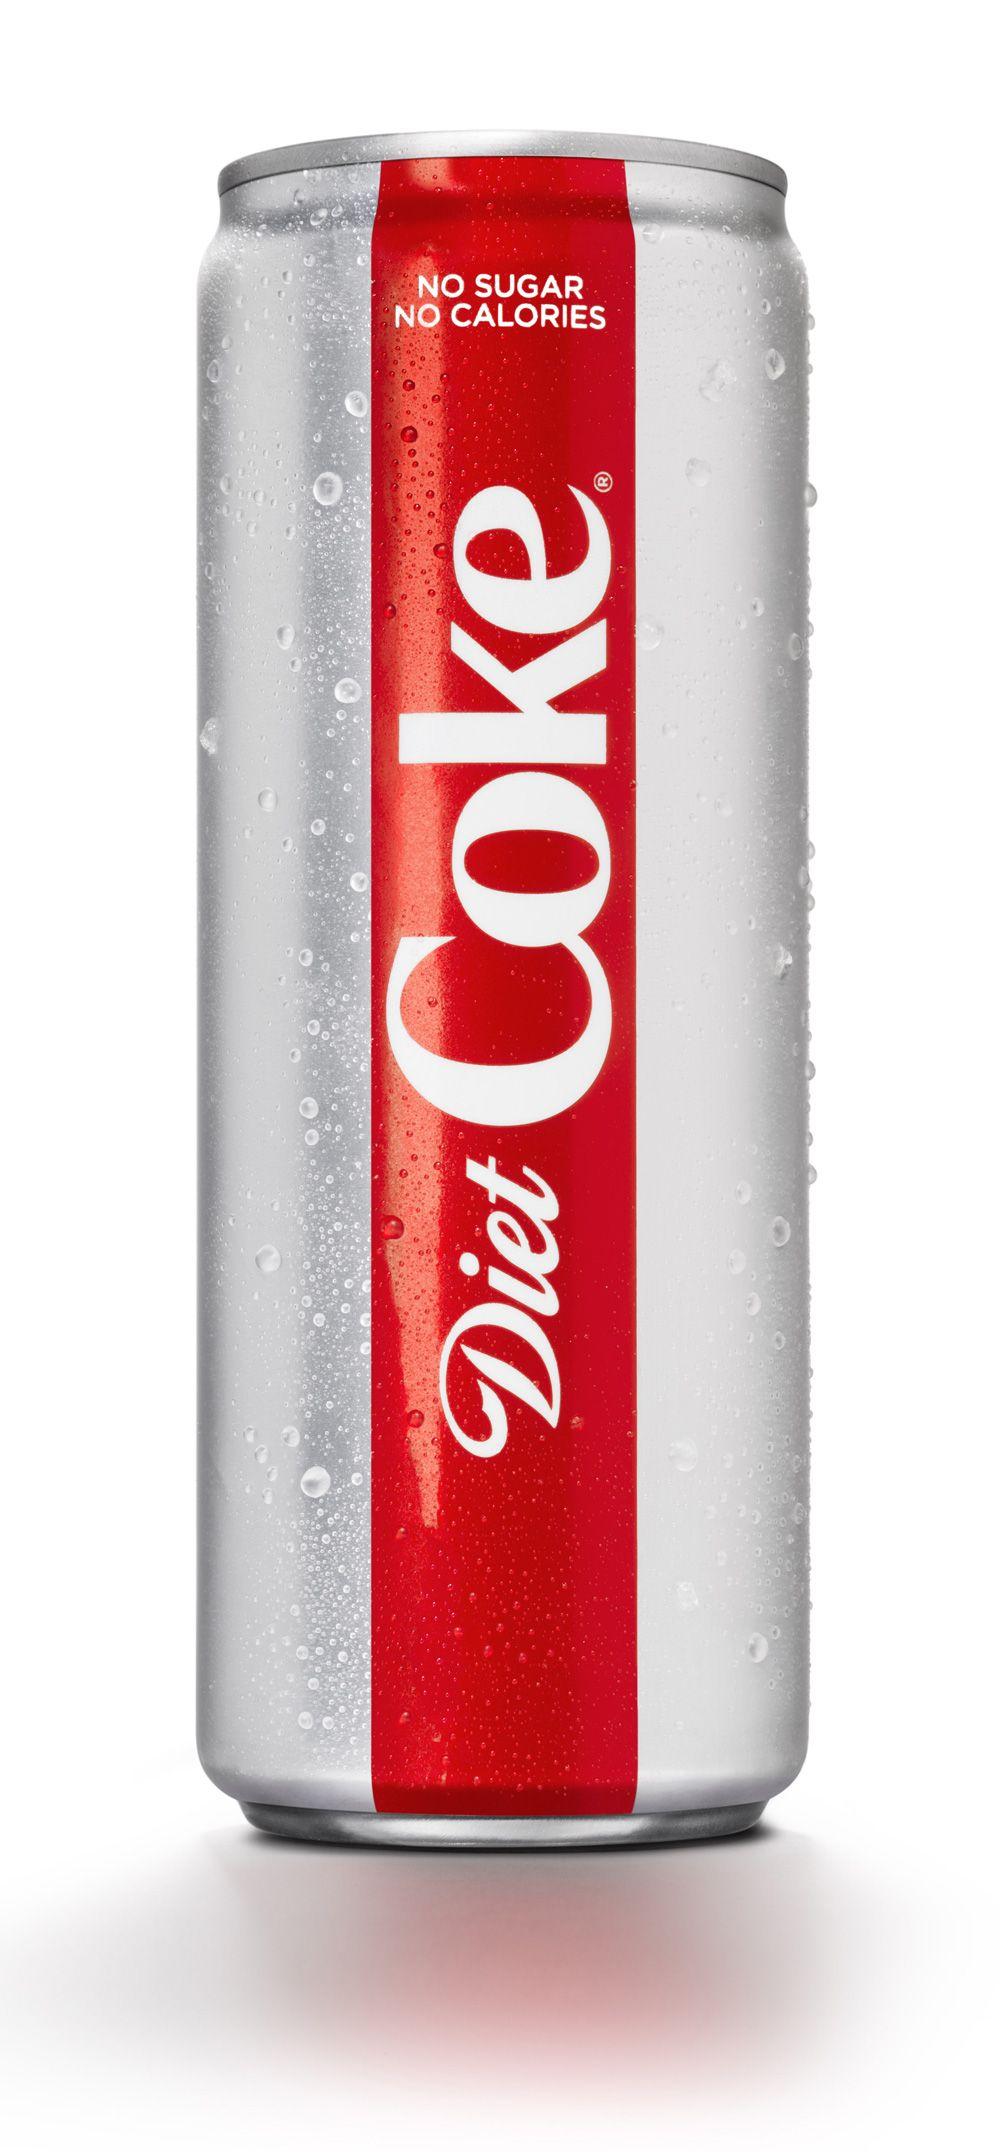 New Diet Coke Logo - Brand New: New Logo And Packaging For Diet Coke Done In House